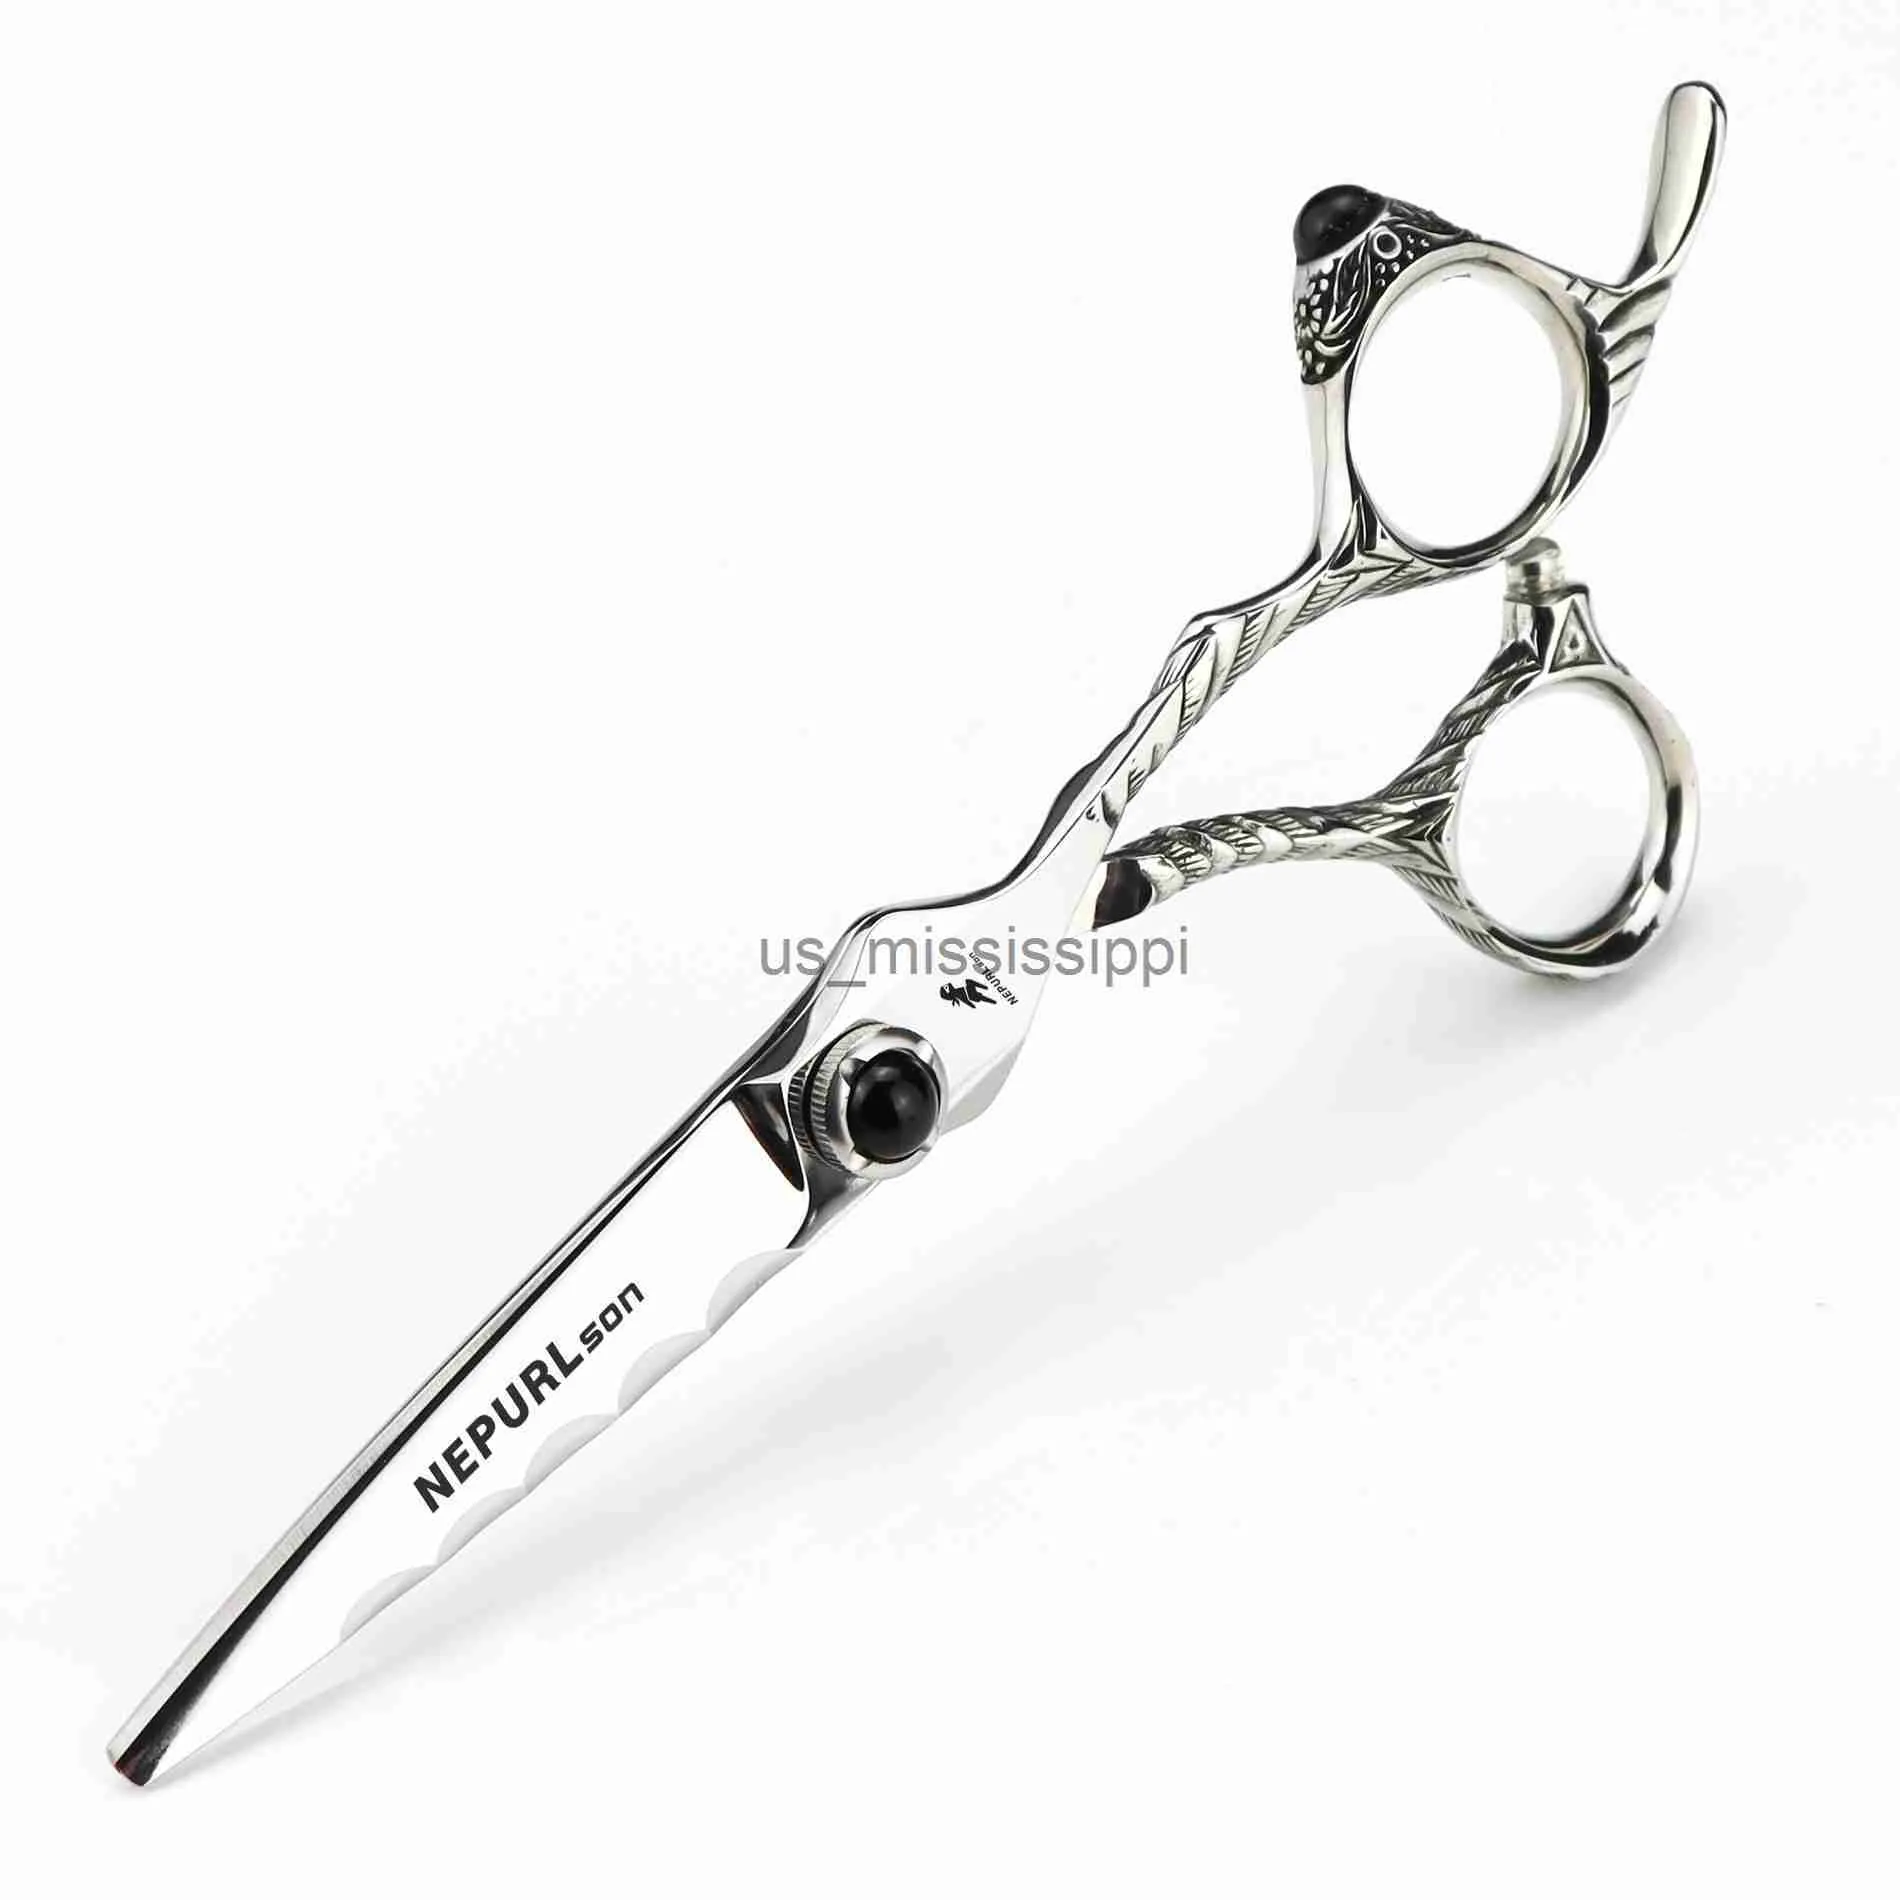 Scissors Shears 60 inch High grade knife head wave Hair Salon Scissors Cut Barber Accessories Haircut Thinning Shear Hairdressing Tool Scissors x0829